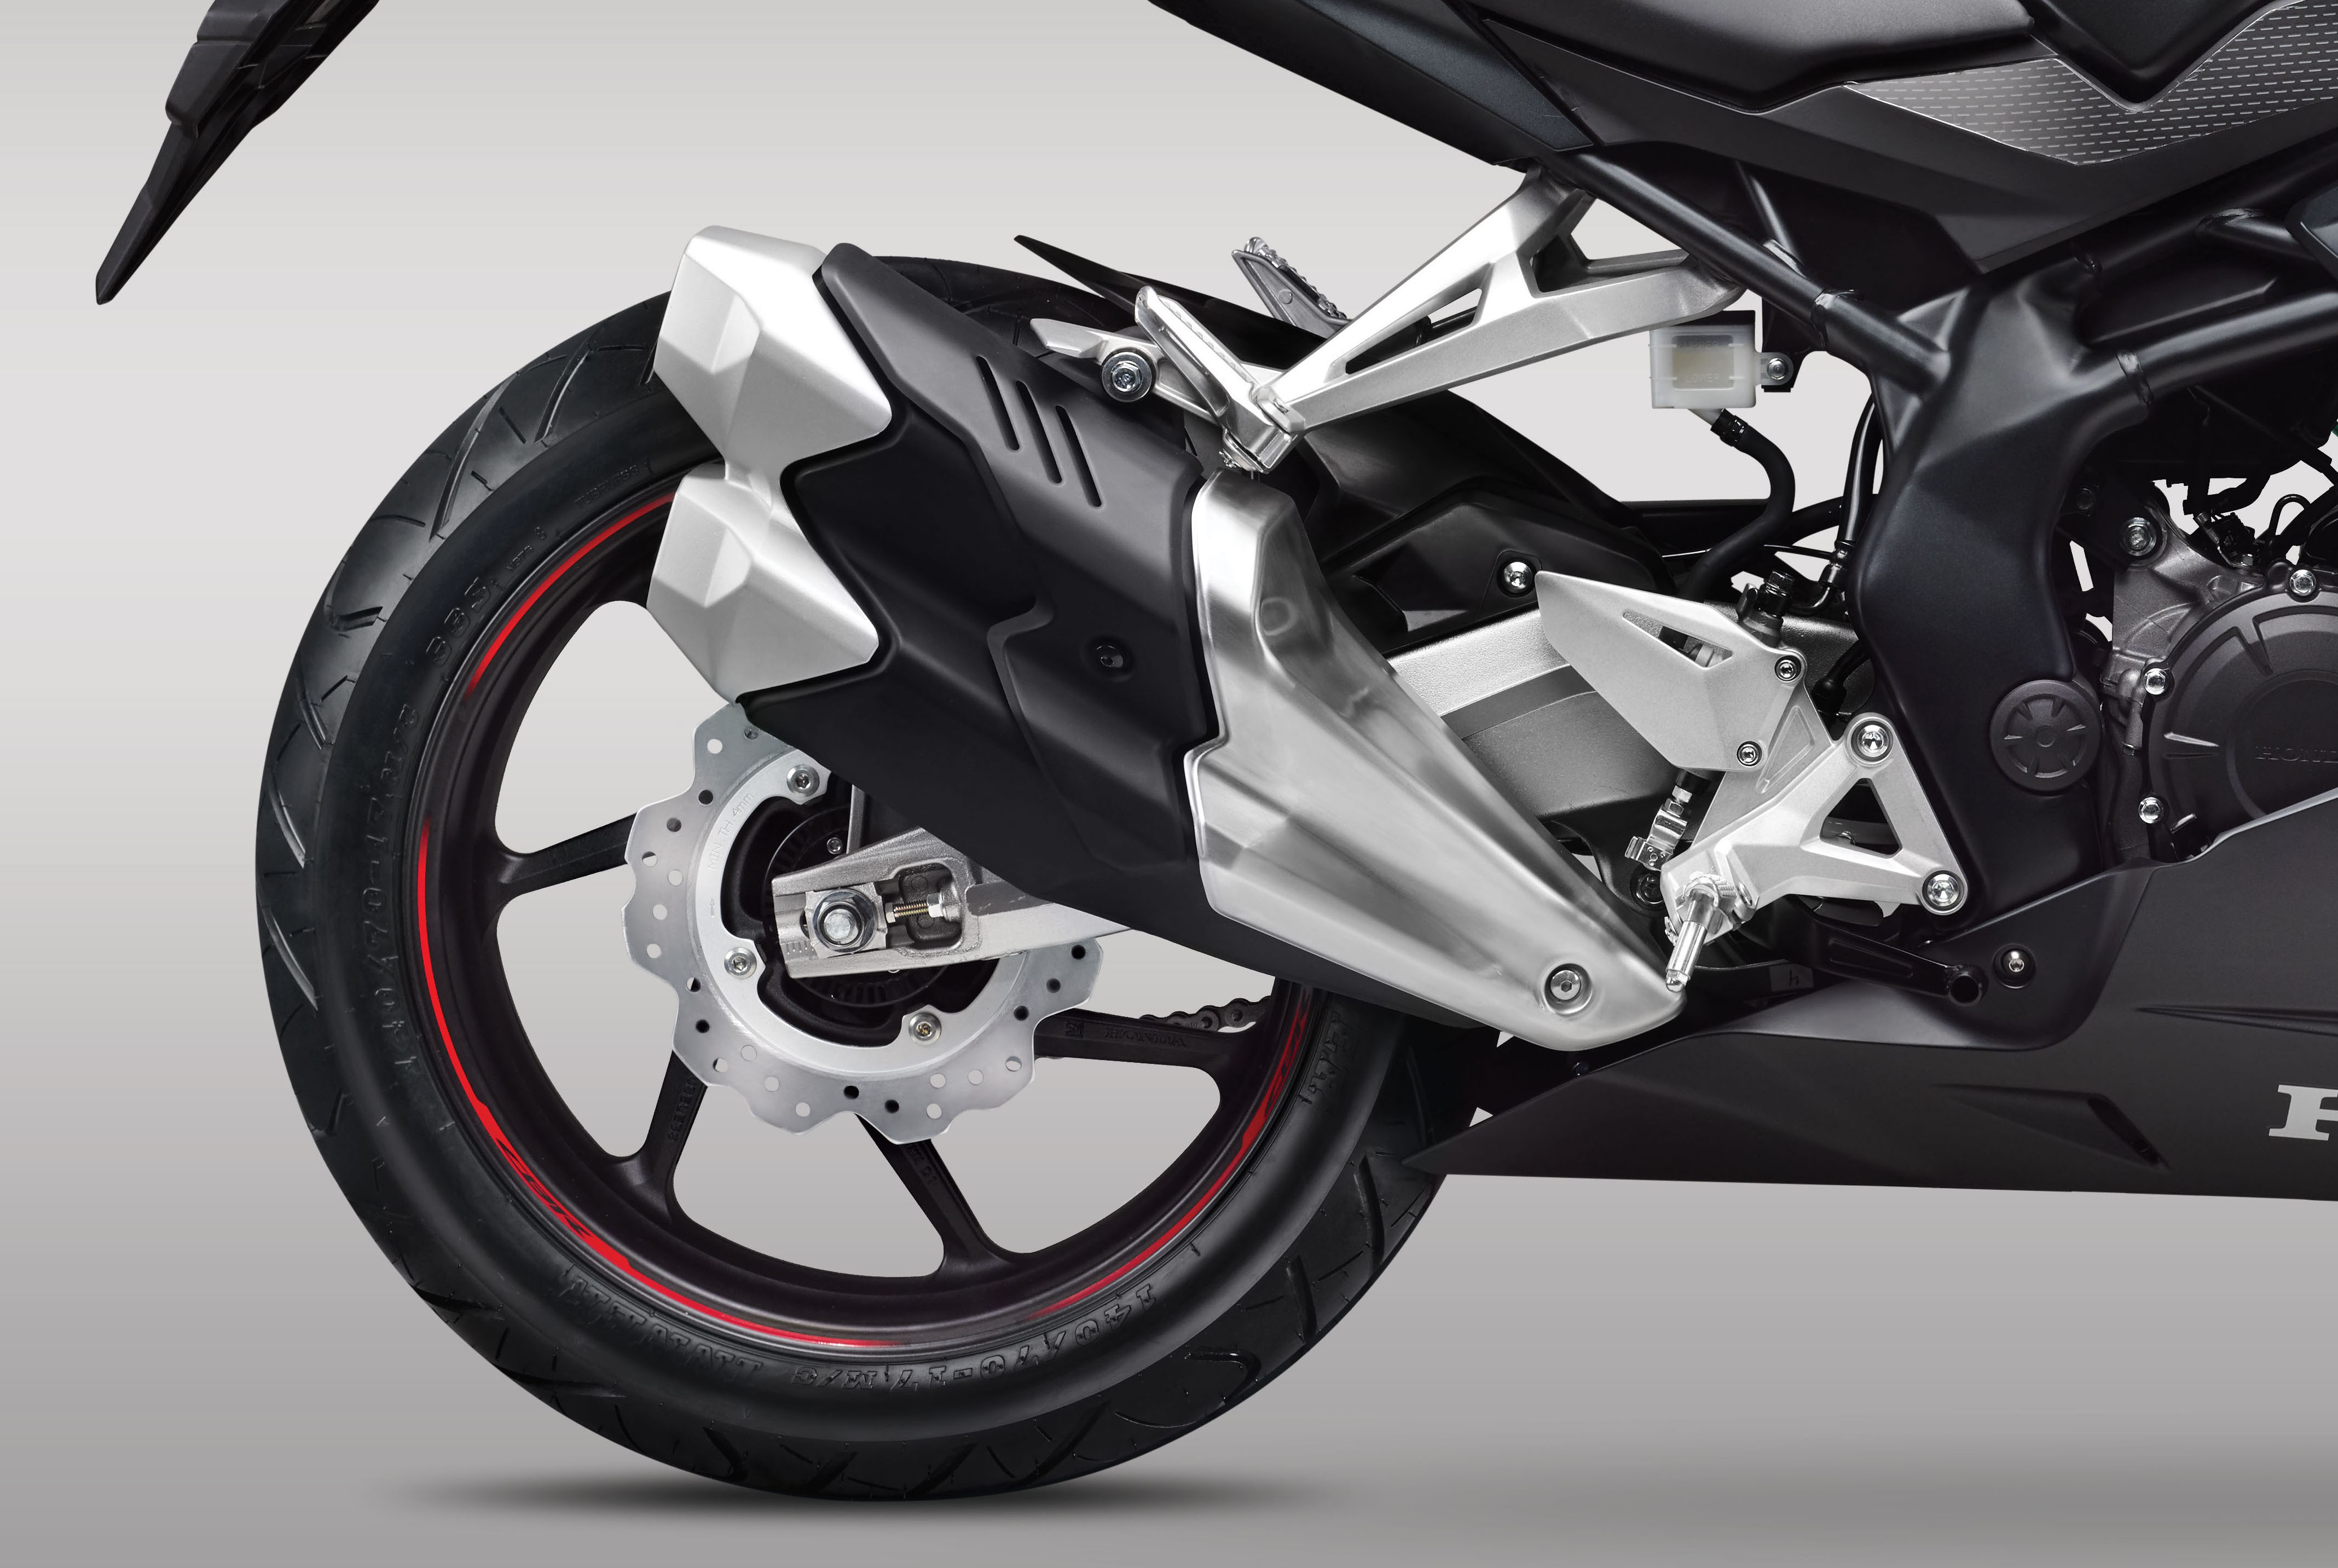 Desain Knalpot Honda CBR250RR, Stylist dan Futuristis